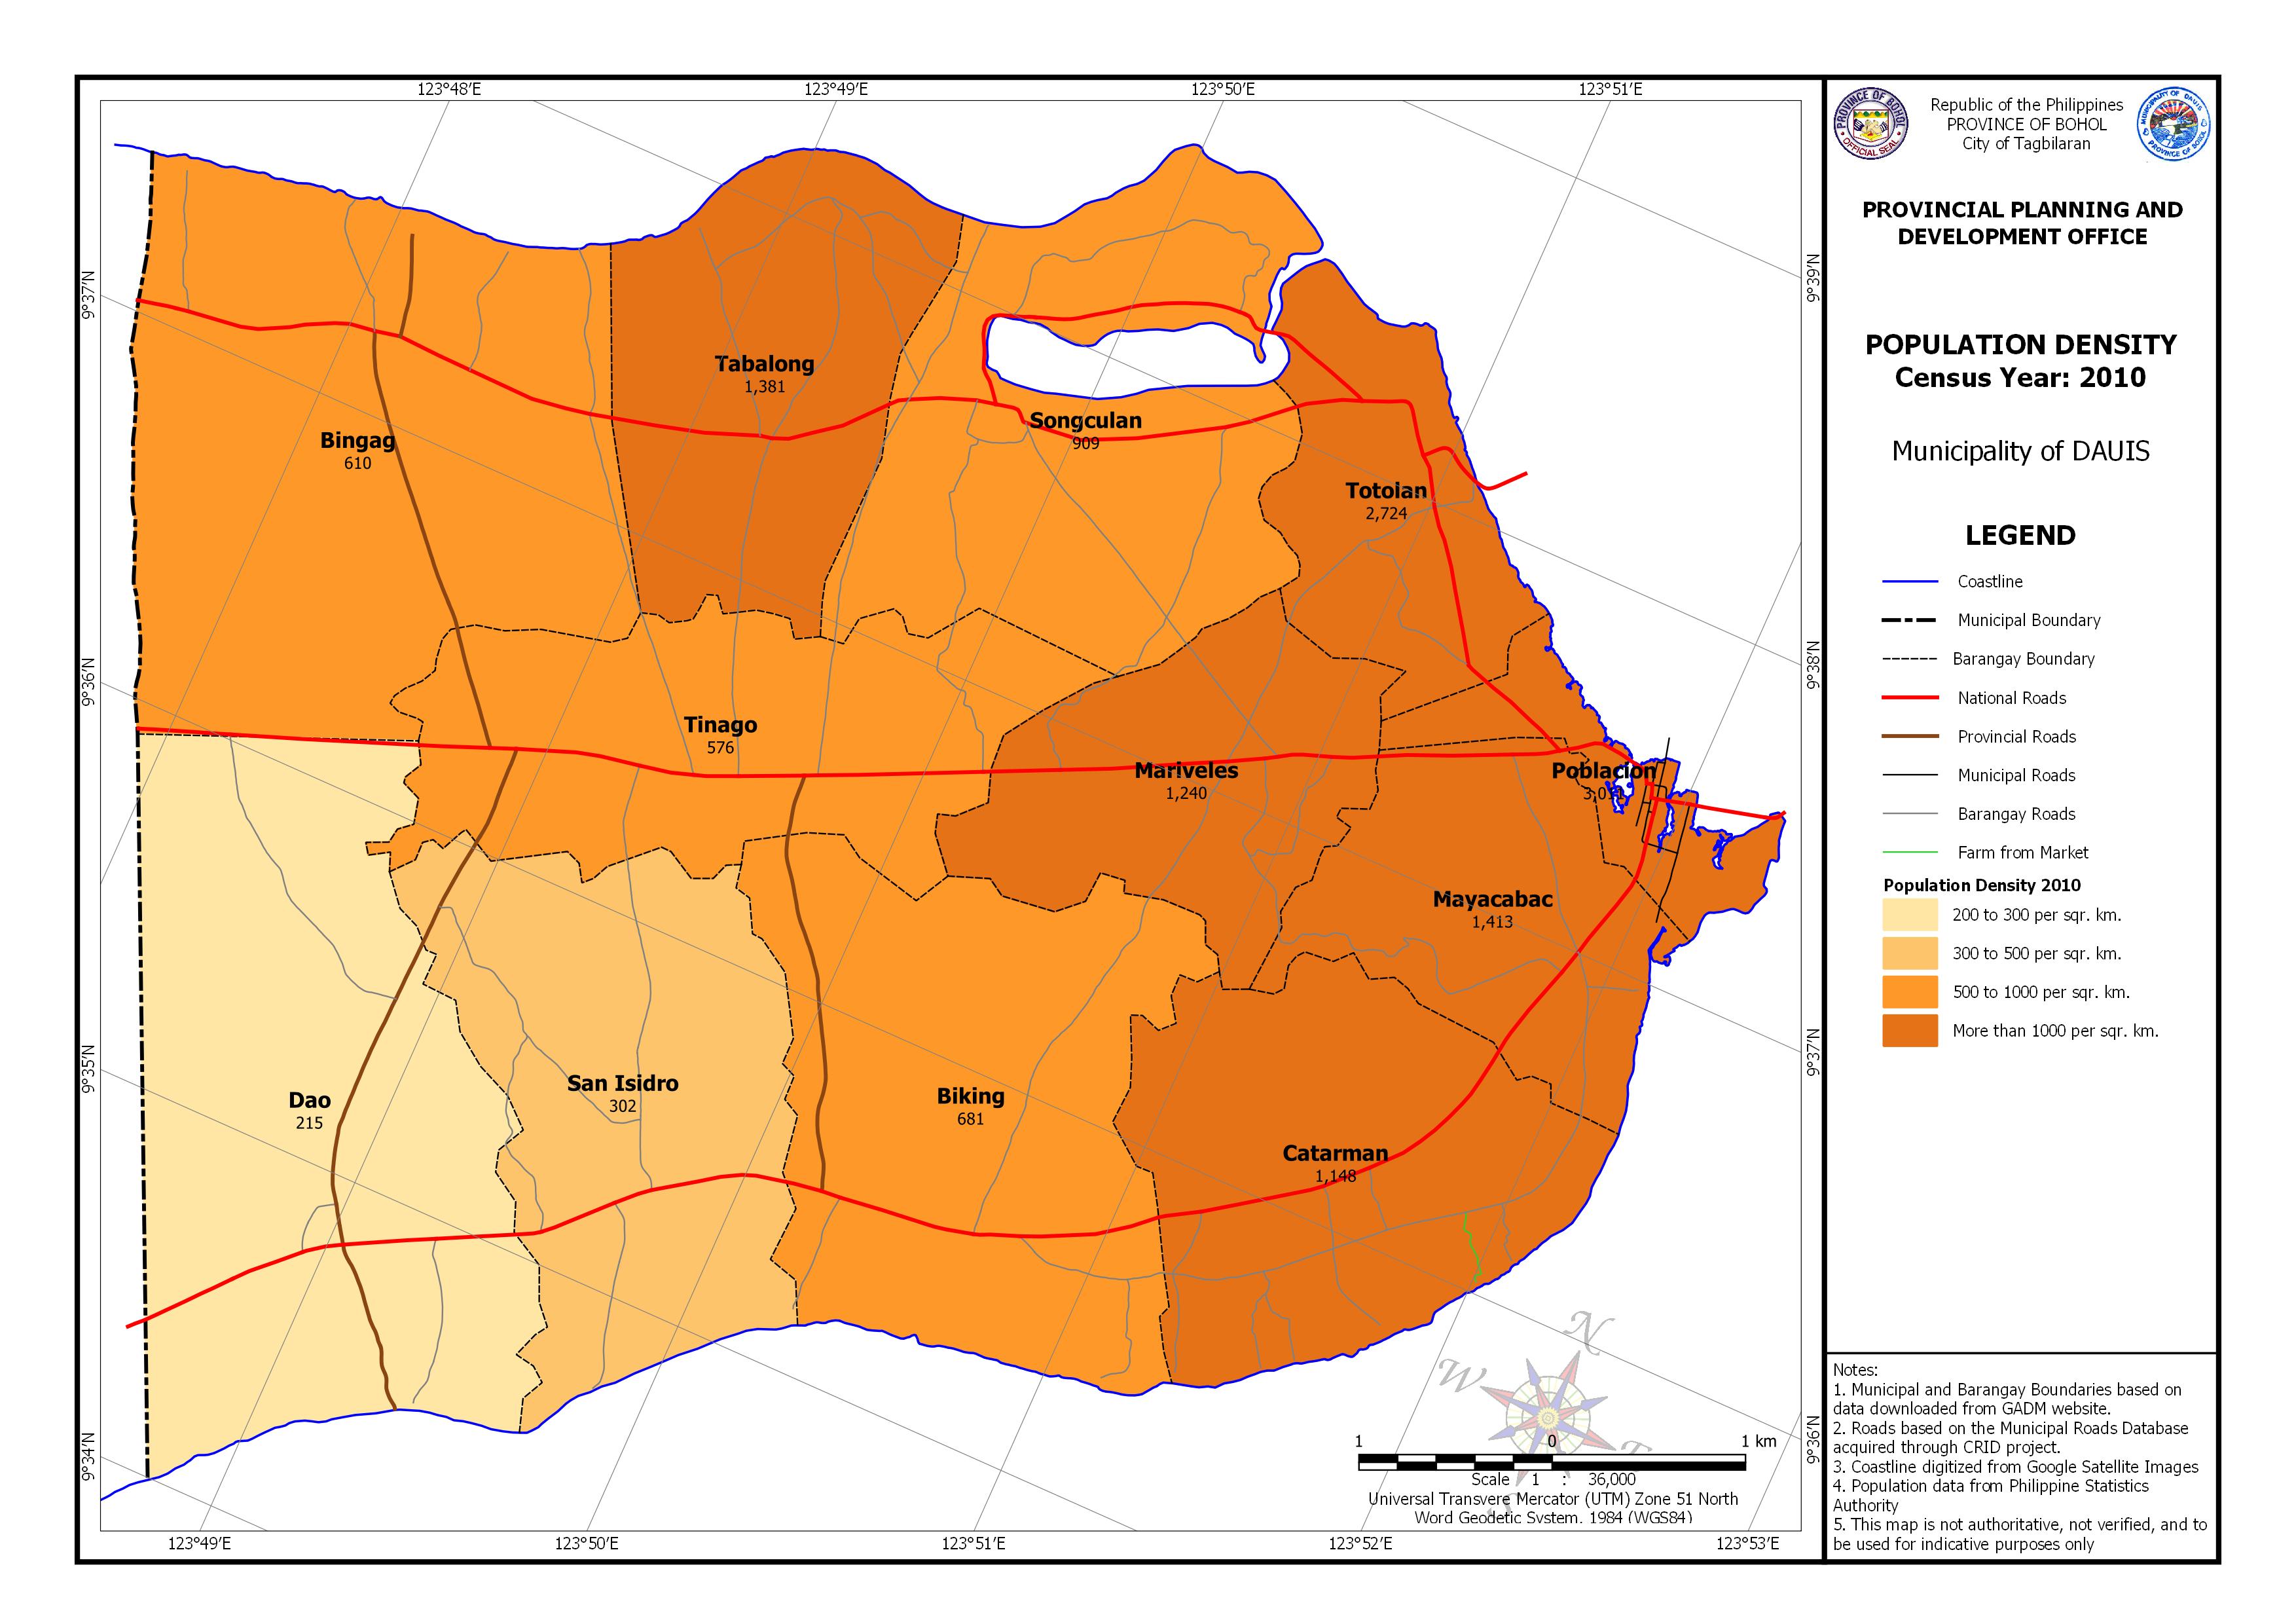 Population Density Census Year: 2010